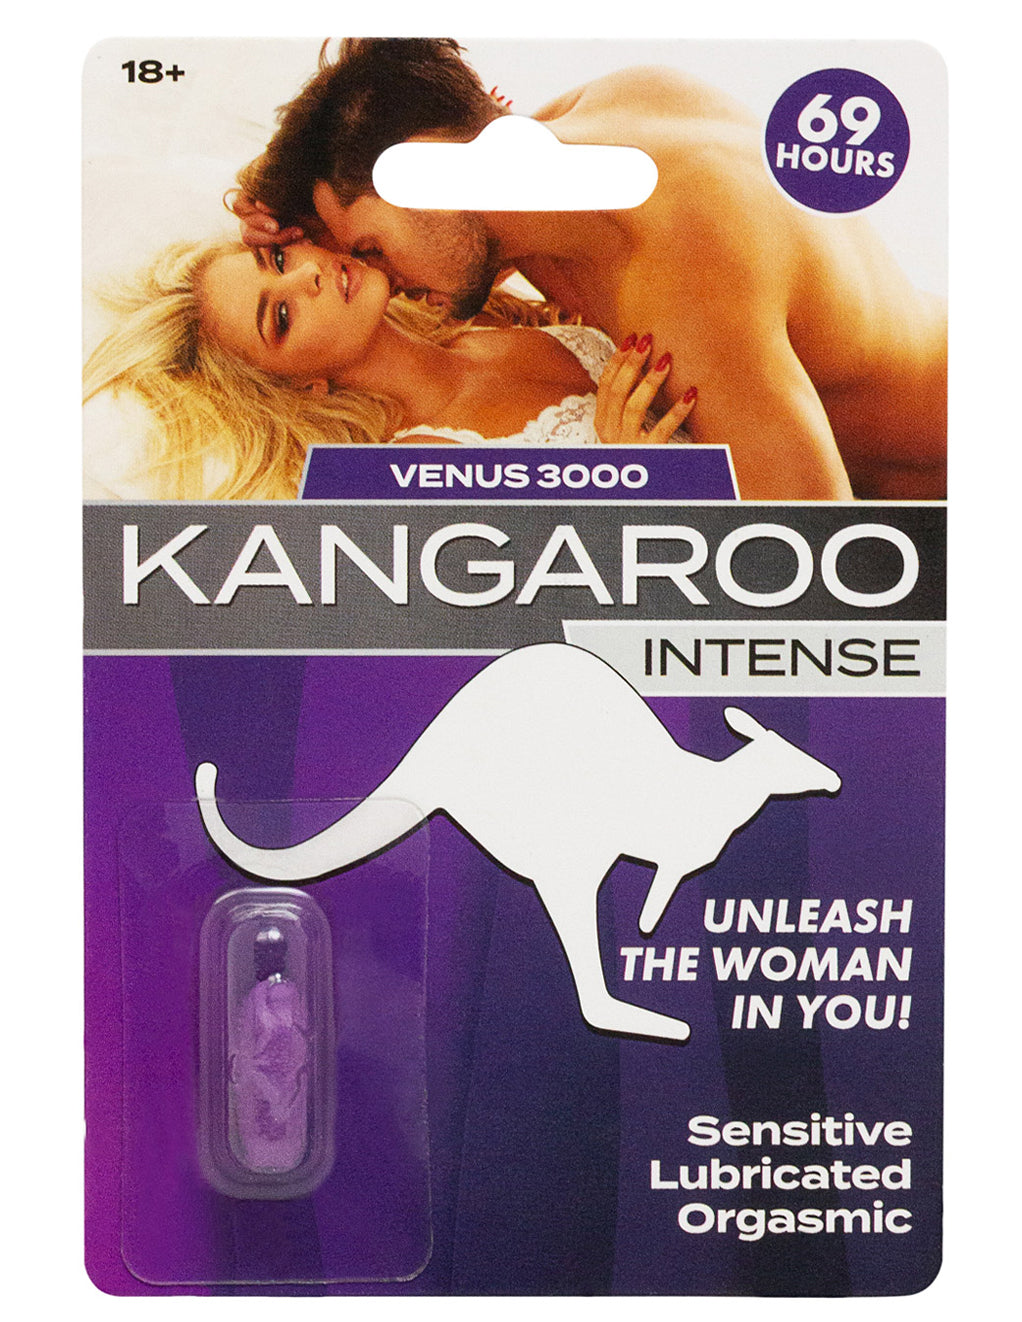 kangaroo vaginas mature naughty wives ireland